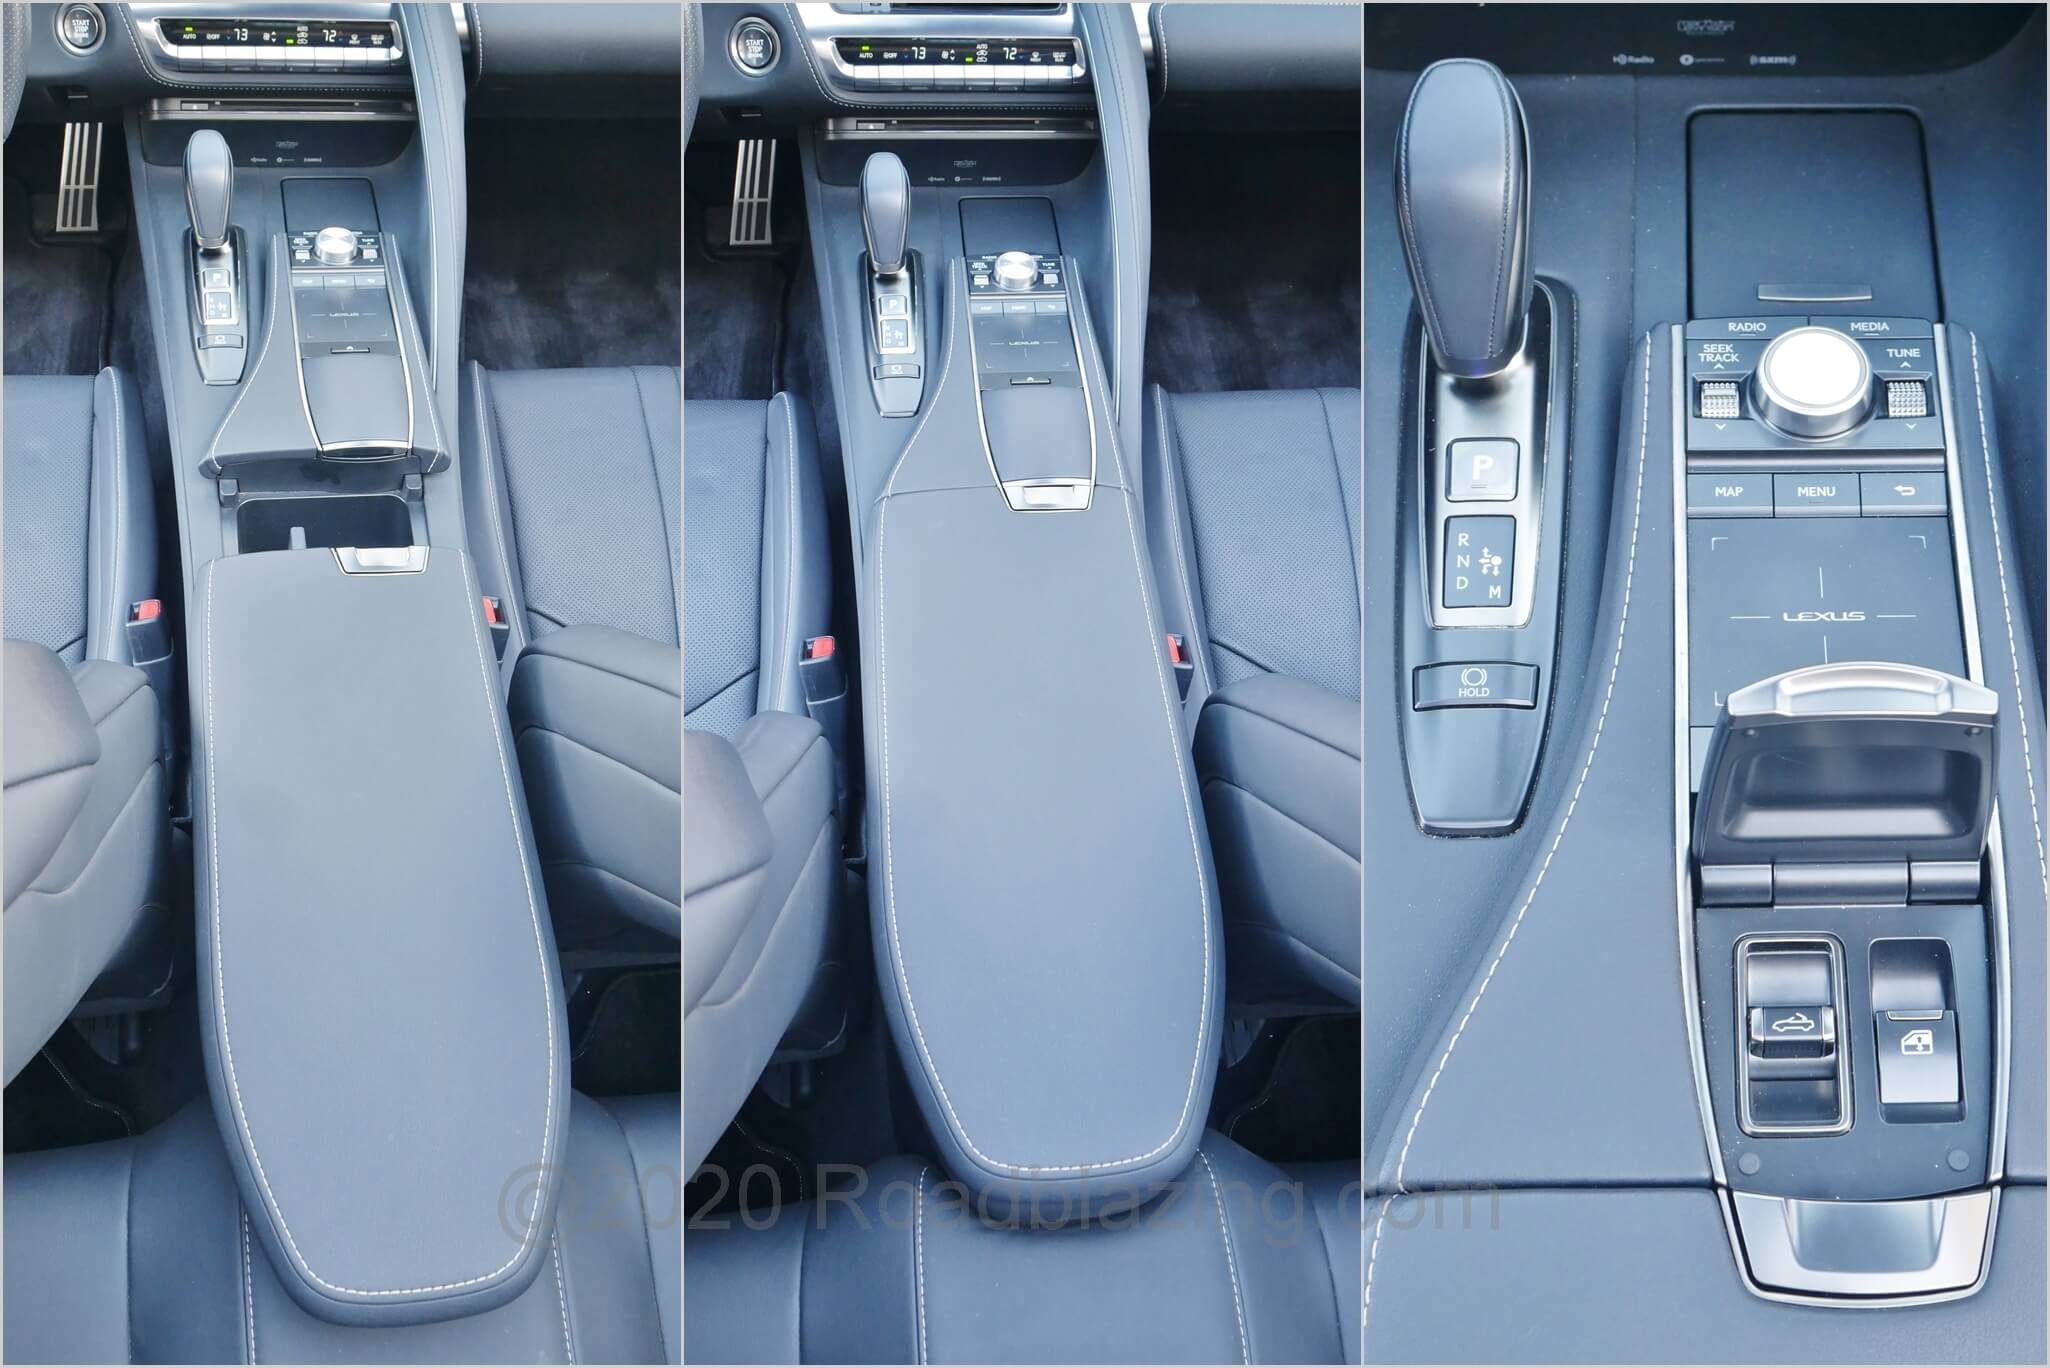 2021 Lexus LC 500 Convertible: slide & tilt center bin armrest cover; Fighter jet style flip cover for power roof toggle switches